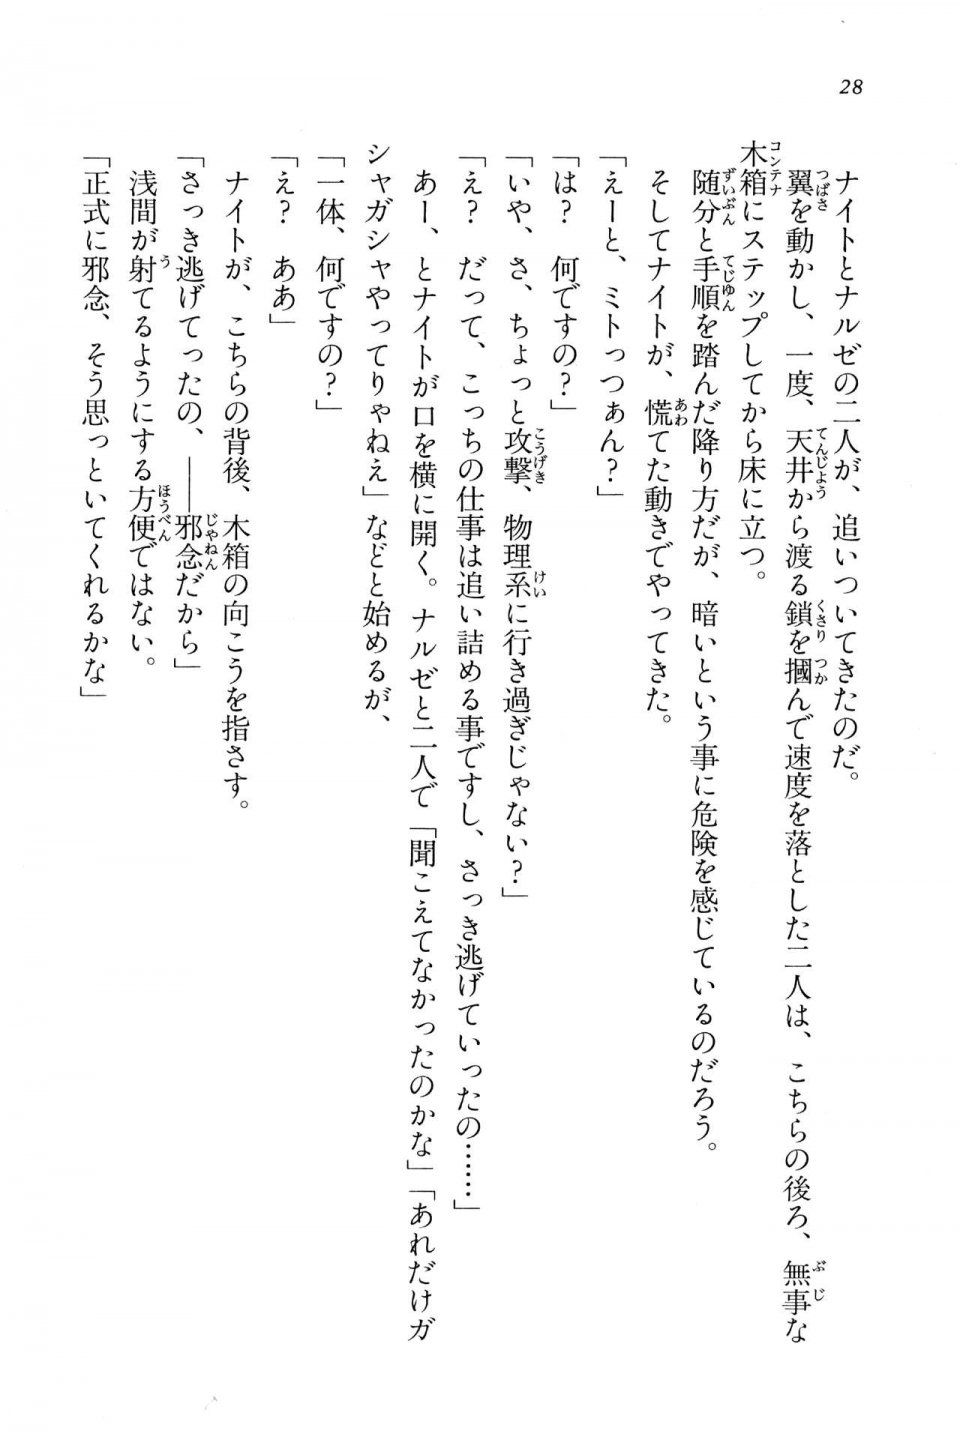 Kyoukai Senjou no Horizon BD Special Mininovel Vol 6(3B) - Photo #32